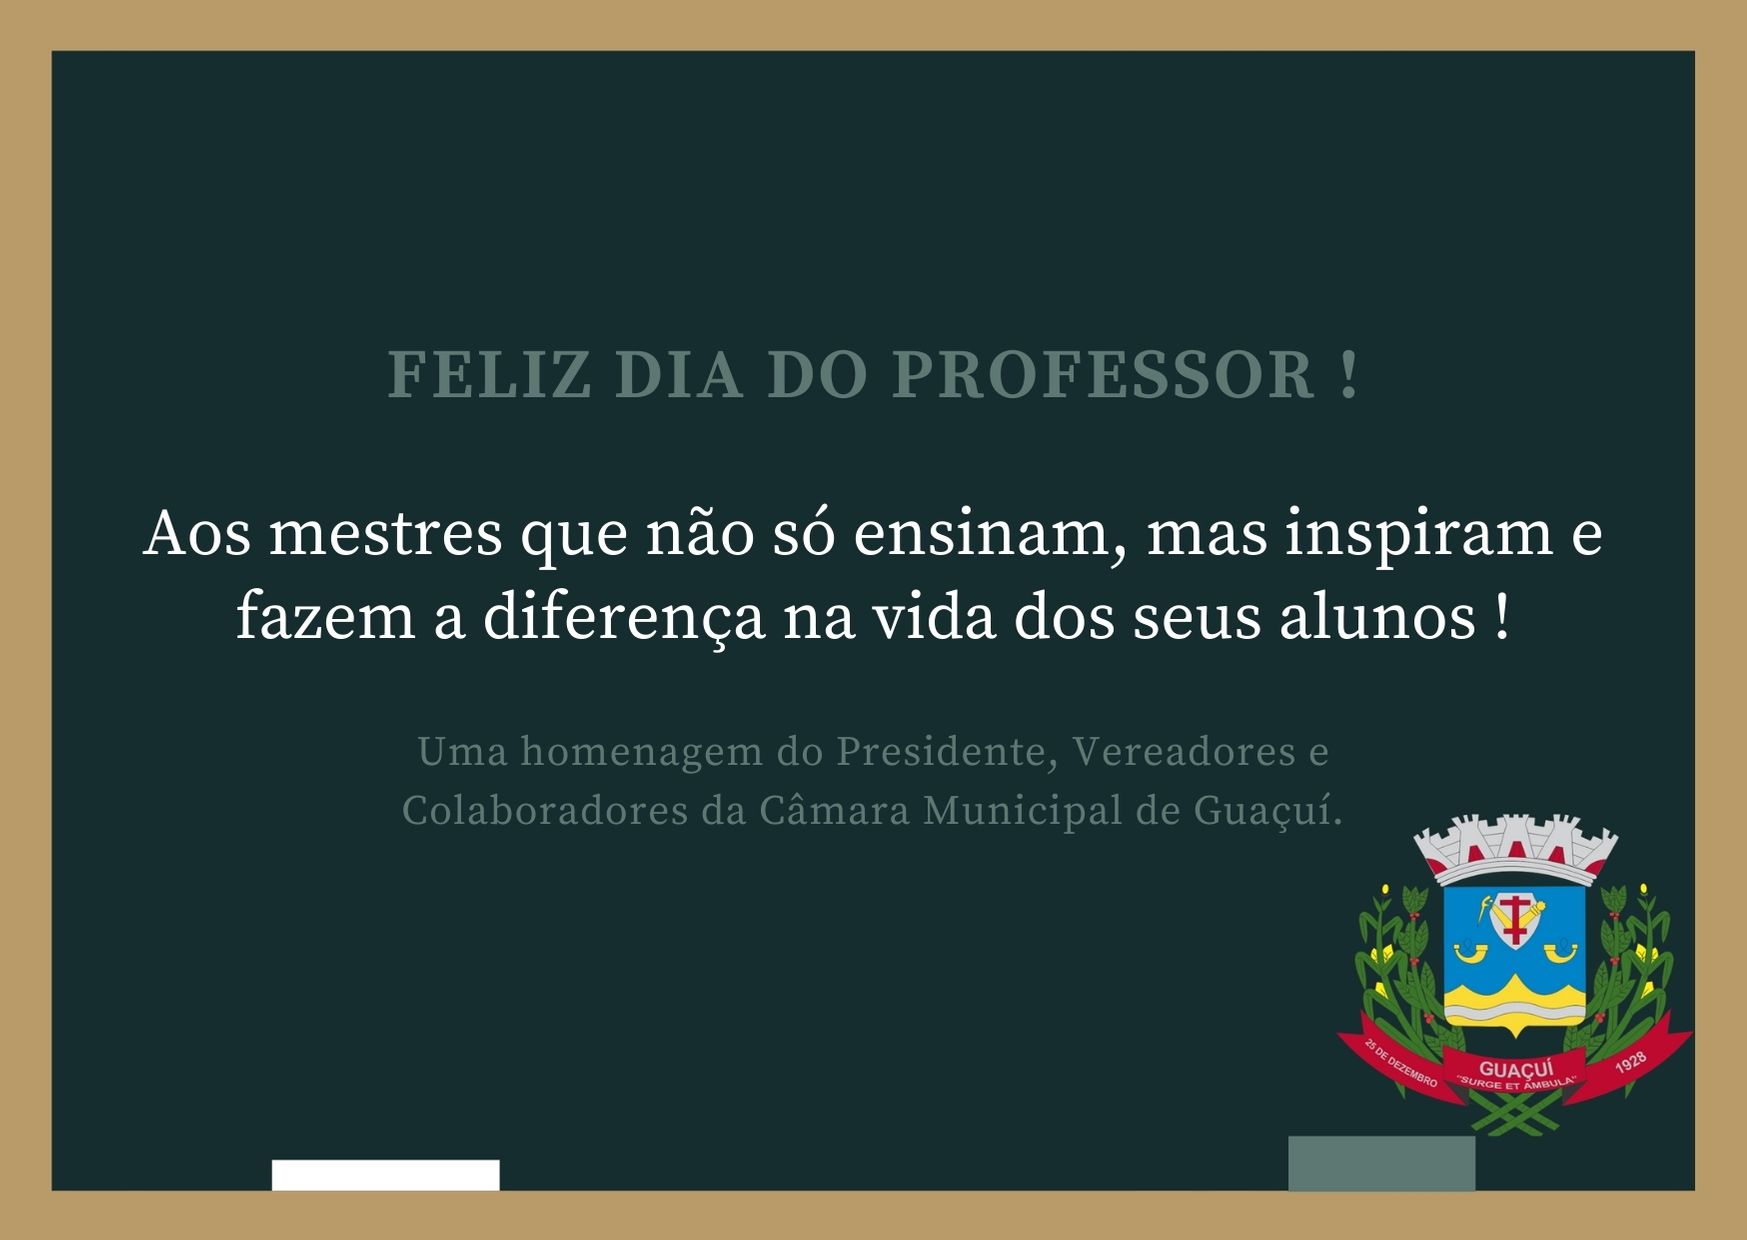 FELIZ DIA DO PROFESSOR !